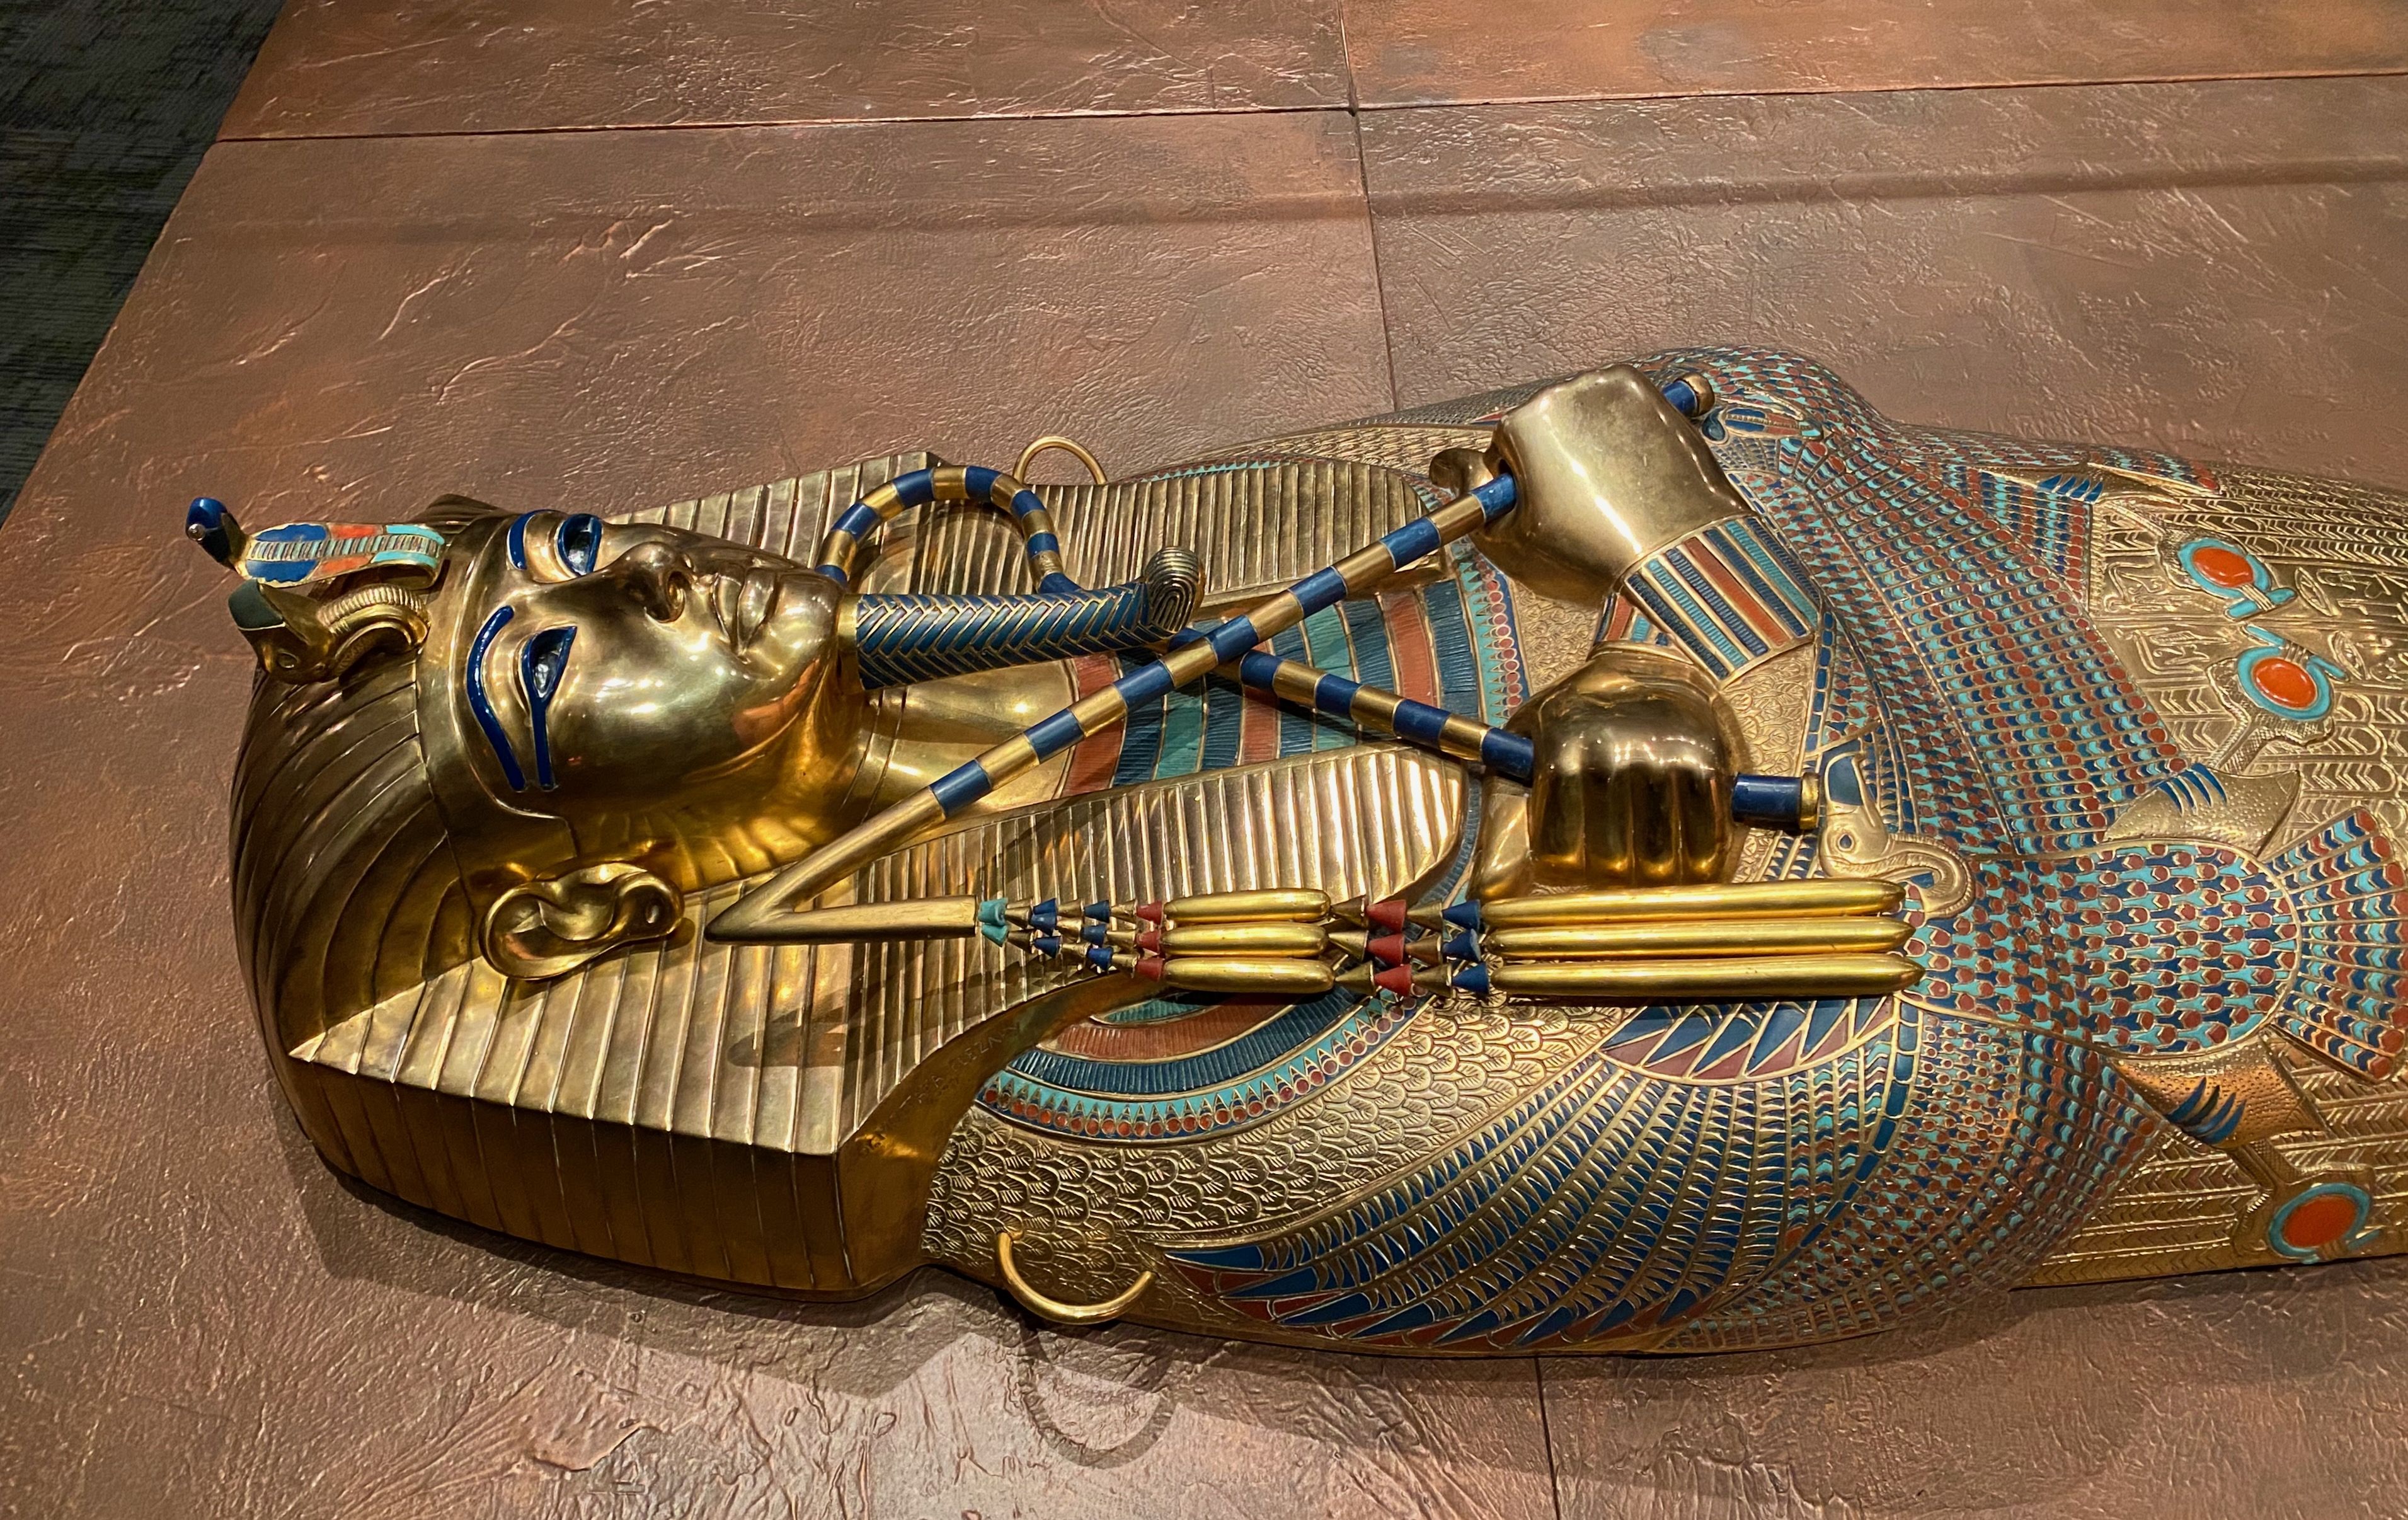 Tutankhamun's inner gold coffin, shaped in his likeness